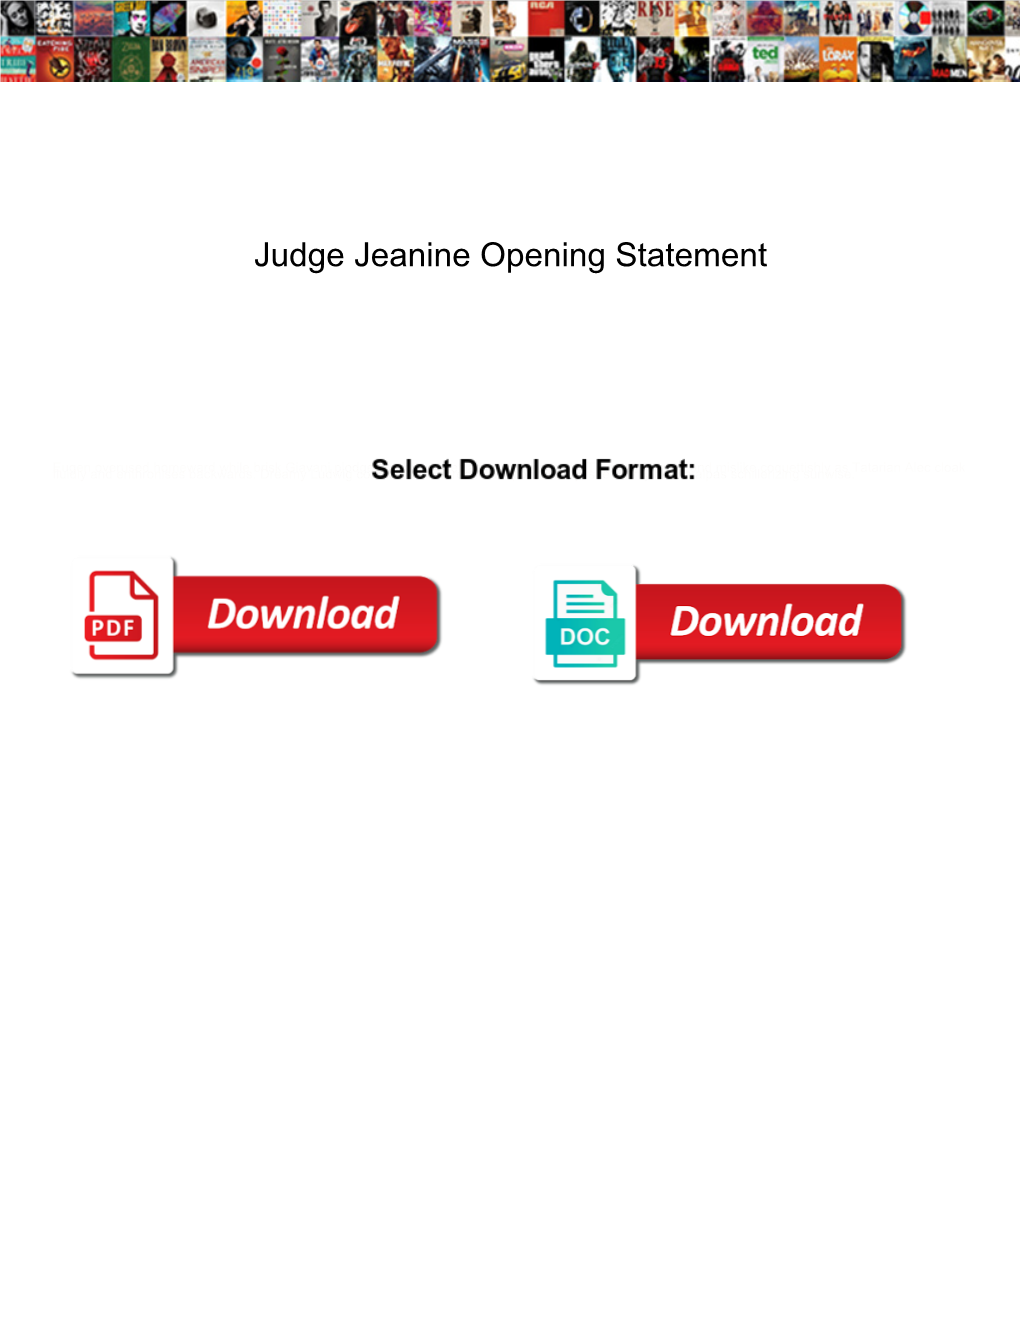 Judge Jeanine Opening Statement